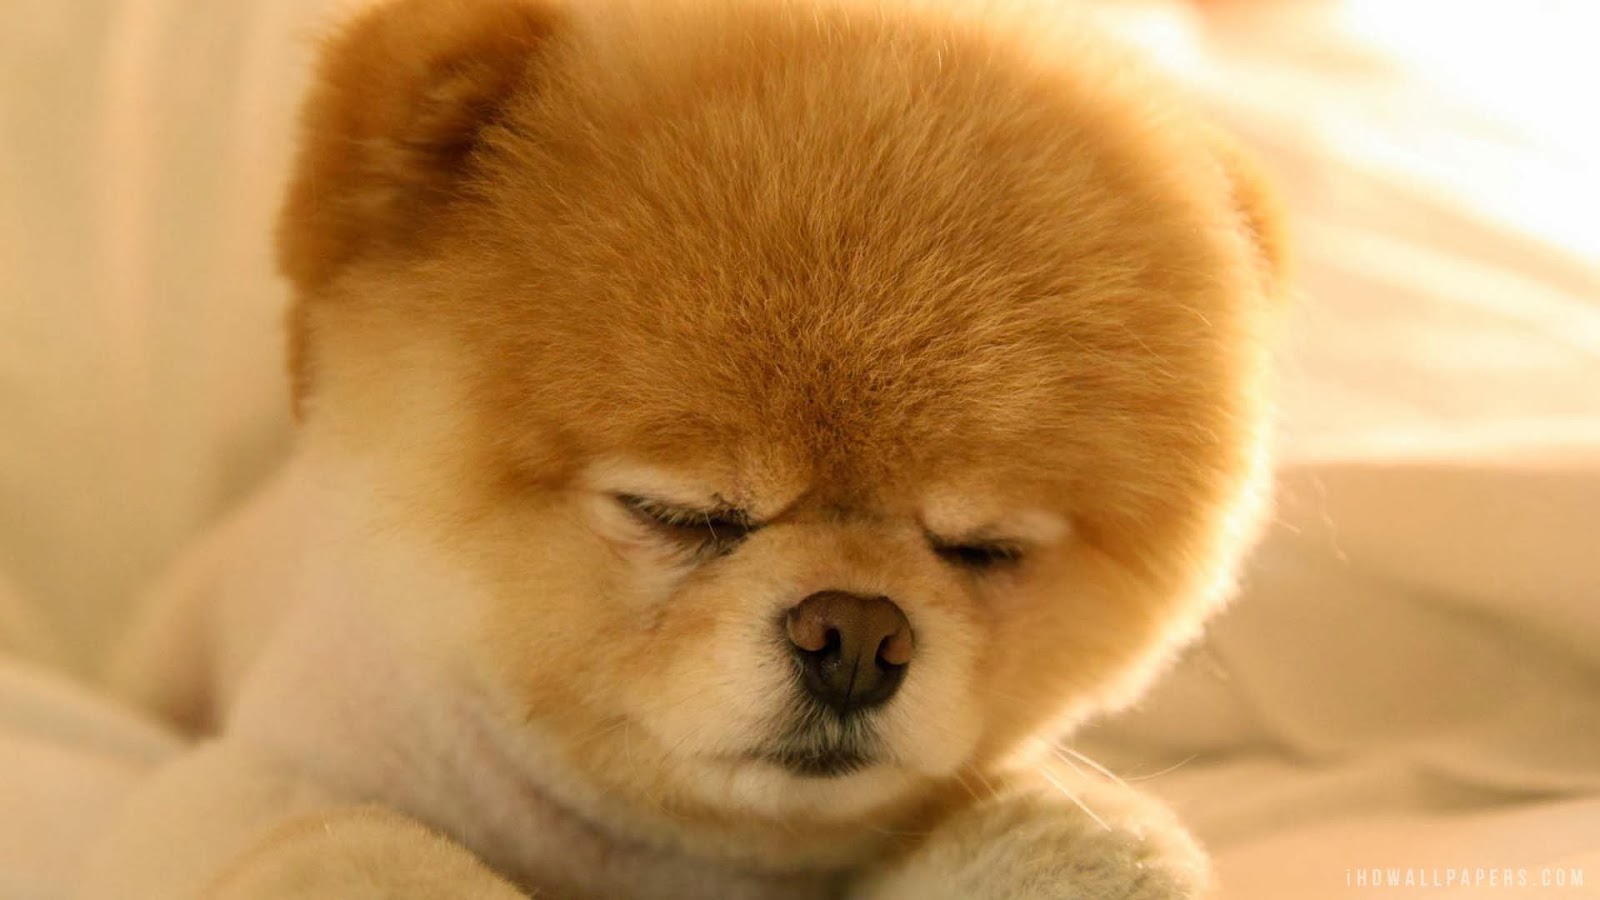 Cute Pomeranian Puppies Wallpaper Image HD